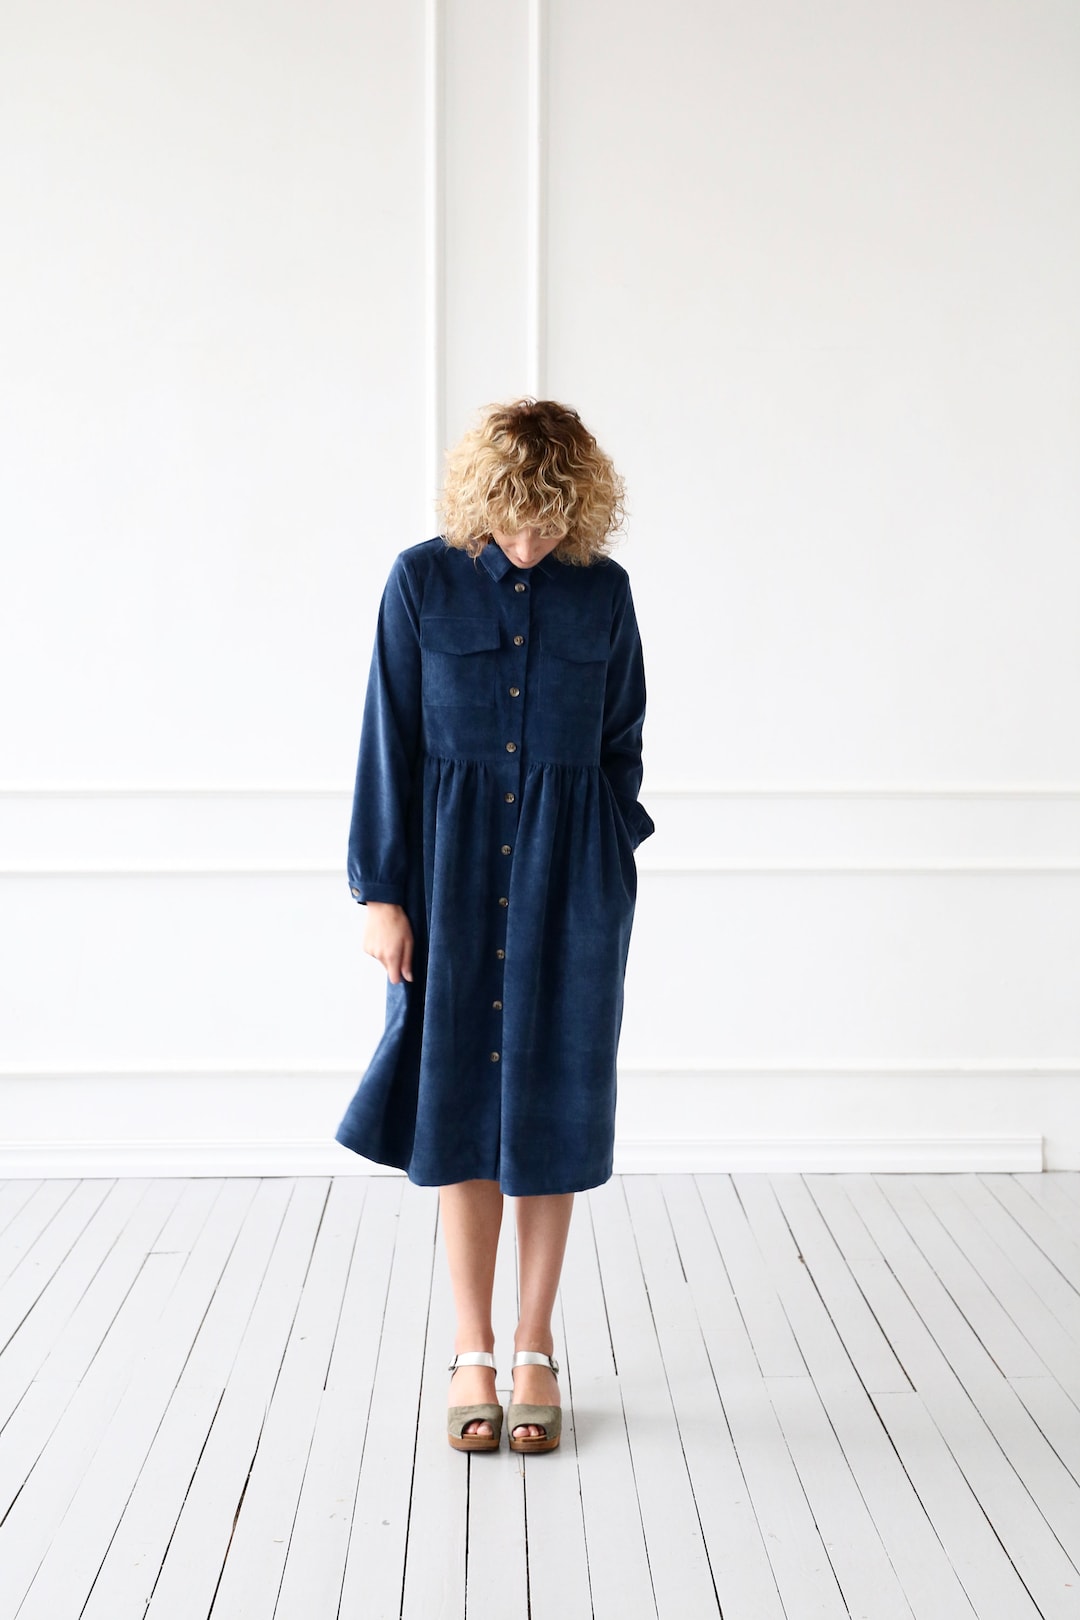 Needlecord A-line Shirt Dress in Navy Blue / OFFON CLOTHING - Etsy UK